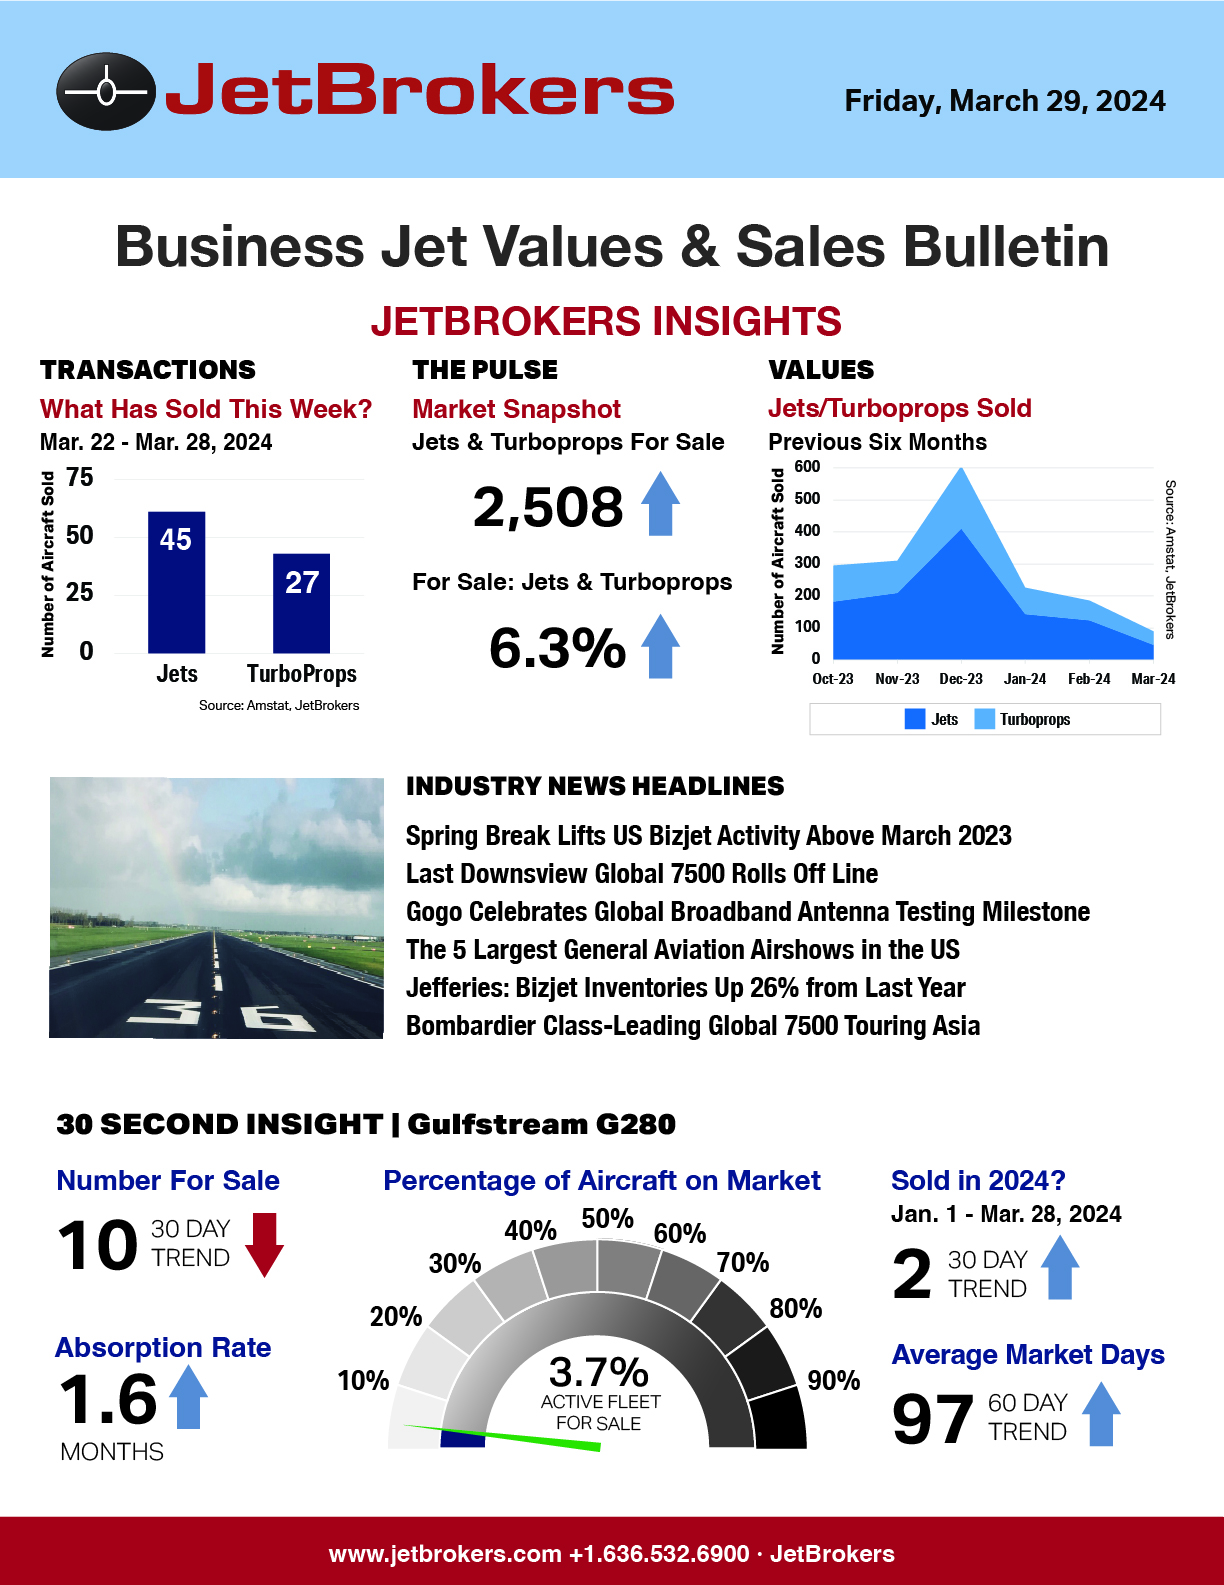 JetBrokers Business Jet Values & Sales Bulletin - March 29, 2024